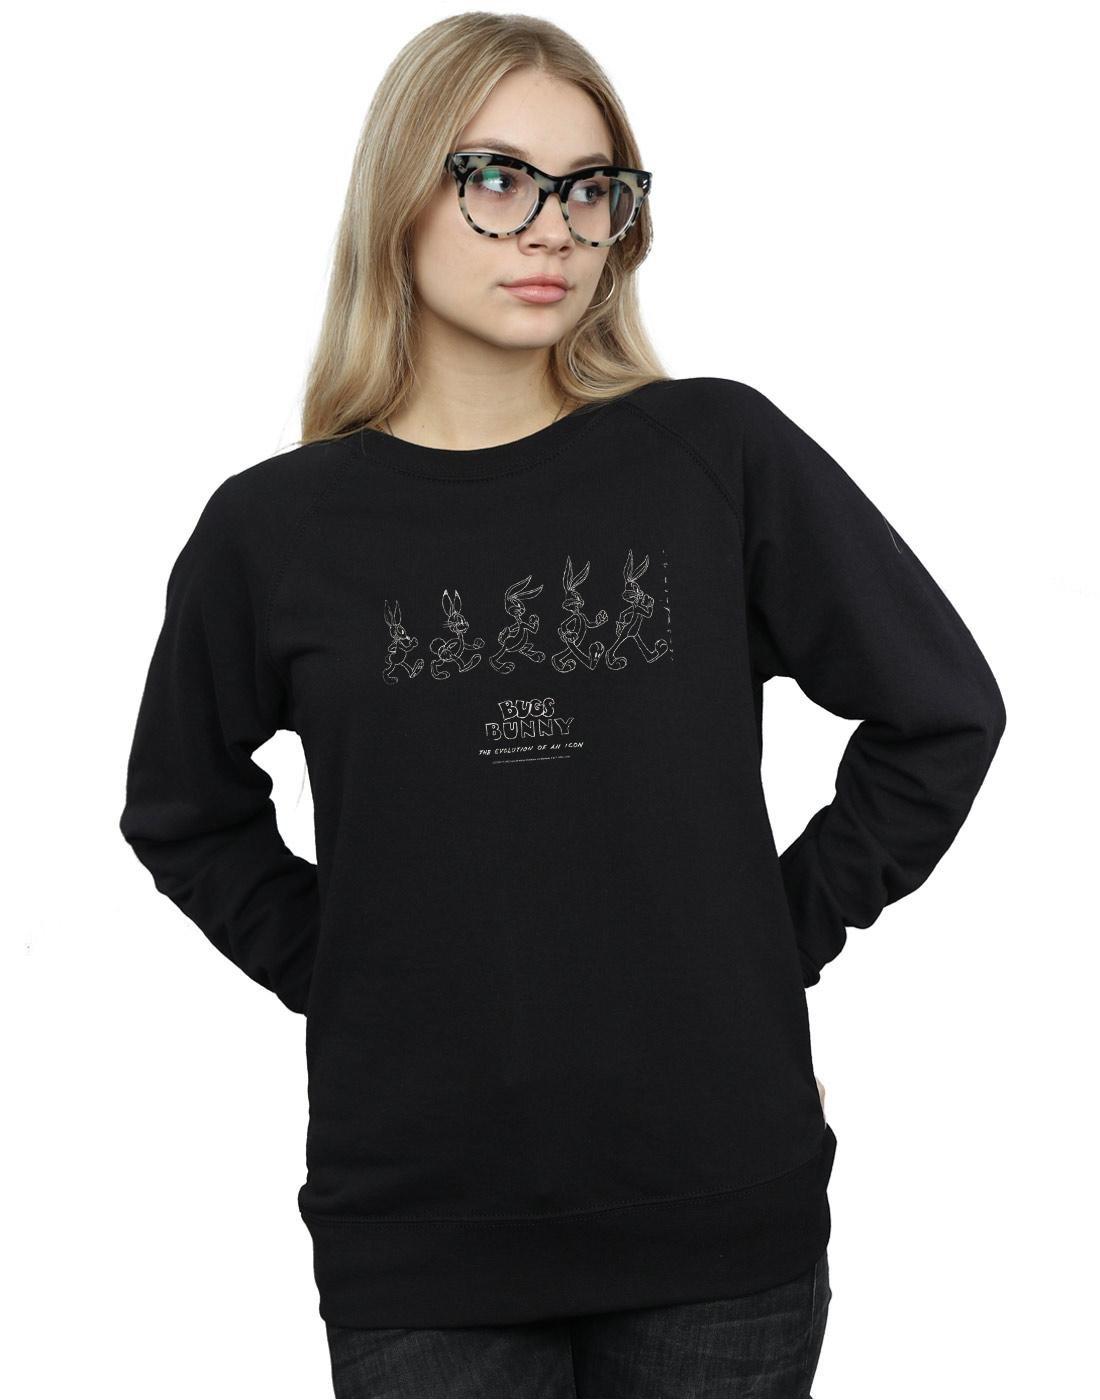 LOONEY TUNES  Bugs Bunny Evolution Sweatshirt 